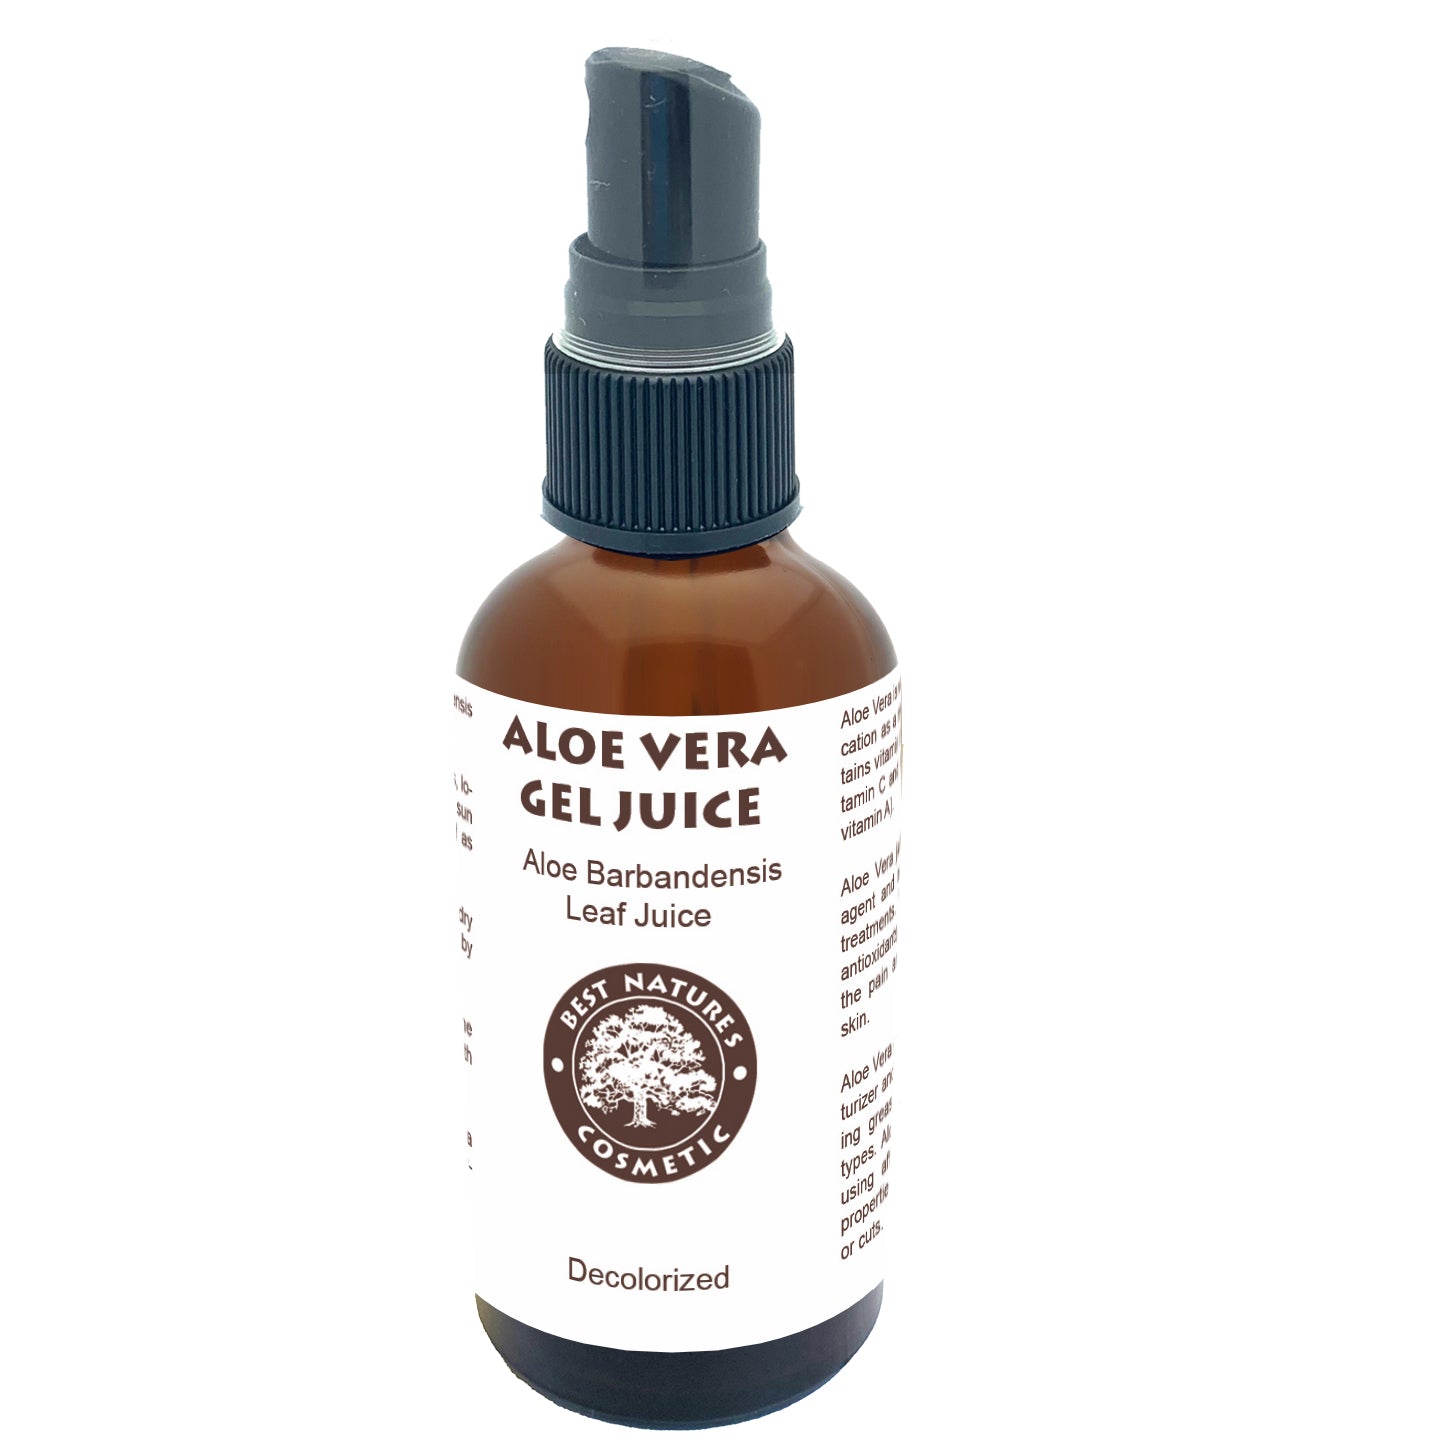 Aloe Vera Gel Juice for Nourished Skin and Hair